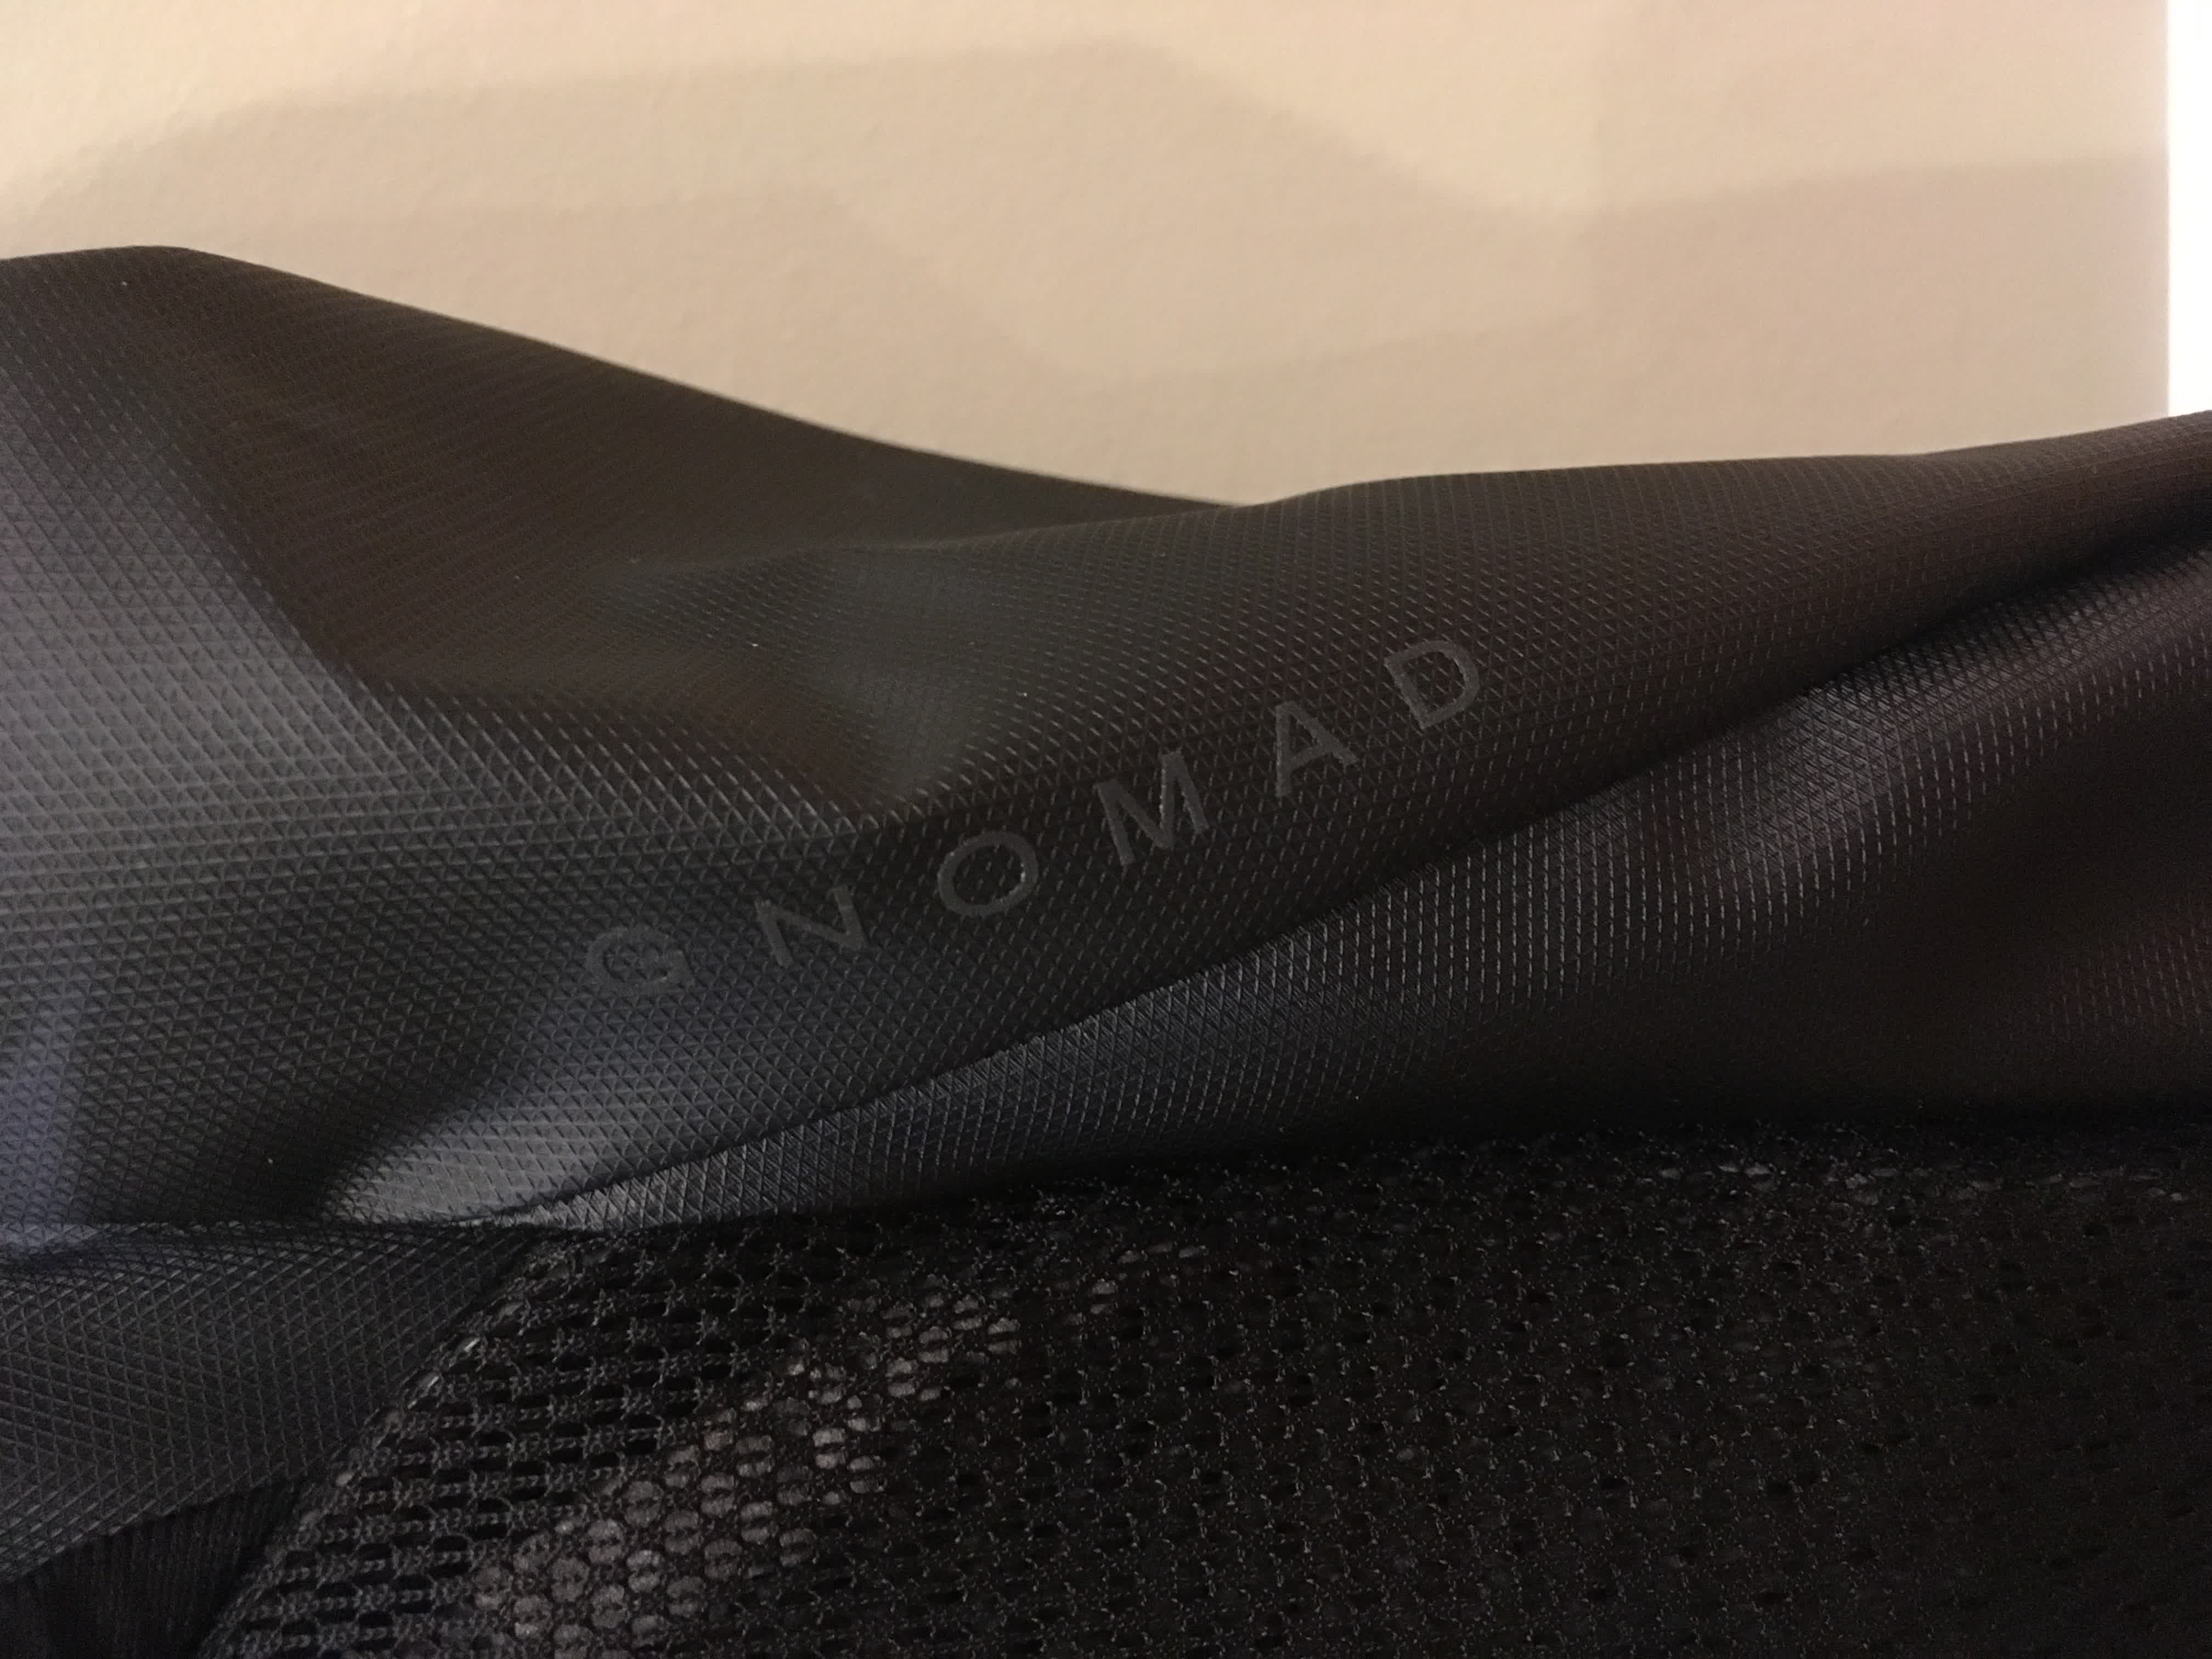 Gnomad name printed on the bag